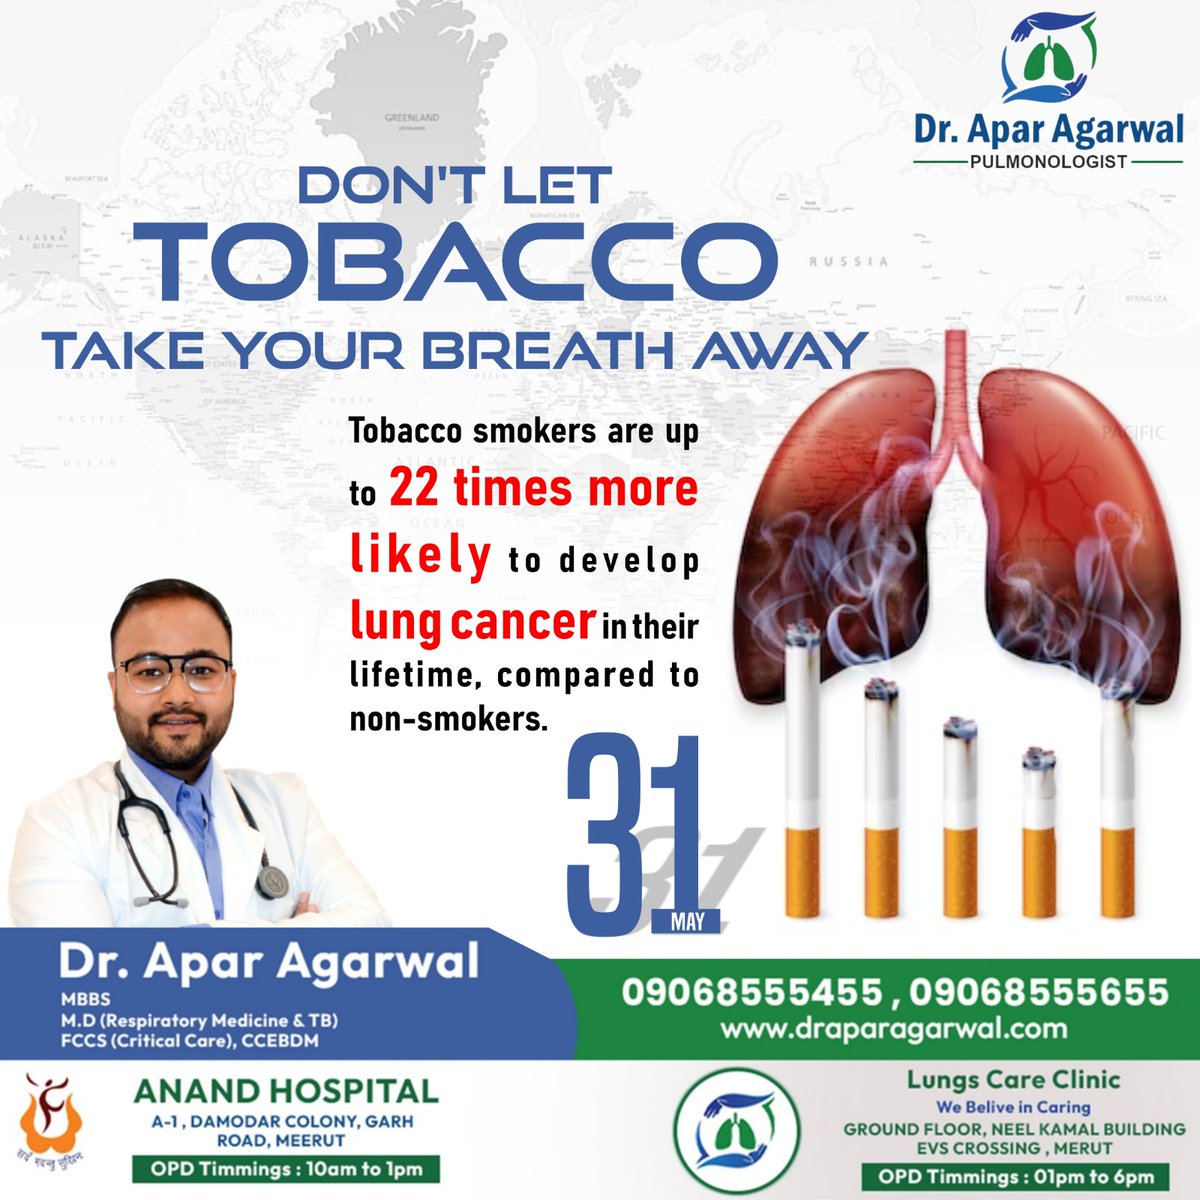 👉𝐖𝐎𝐑𝐋𝐃 𝐍𝐎 𝐓𝐎𝐁𝐀𝐂𝐂𝐎 𝐃𝐀𝐘🚭
DON'T LET TOBACCO TAKE YOUR BREATH AWAY

#DrAparAgarwal #lung #health #medical #medicine #lungcancer #asthma #lungdisease #pulmonary #lungs #respiratorycare #WorldNoTobaccoDay #nosmoking #quitsmoking